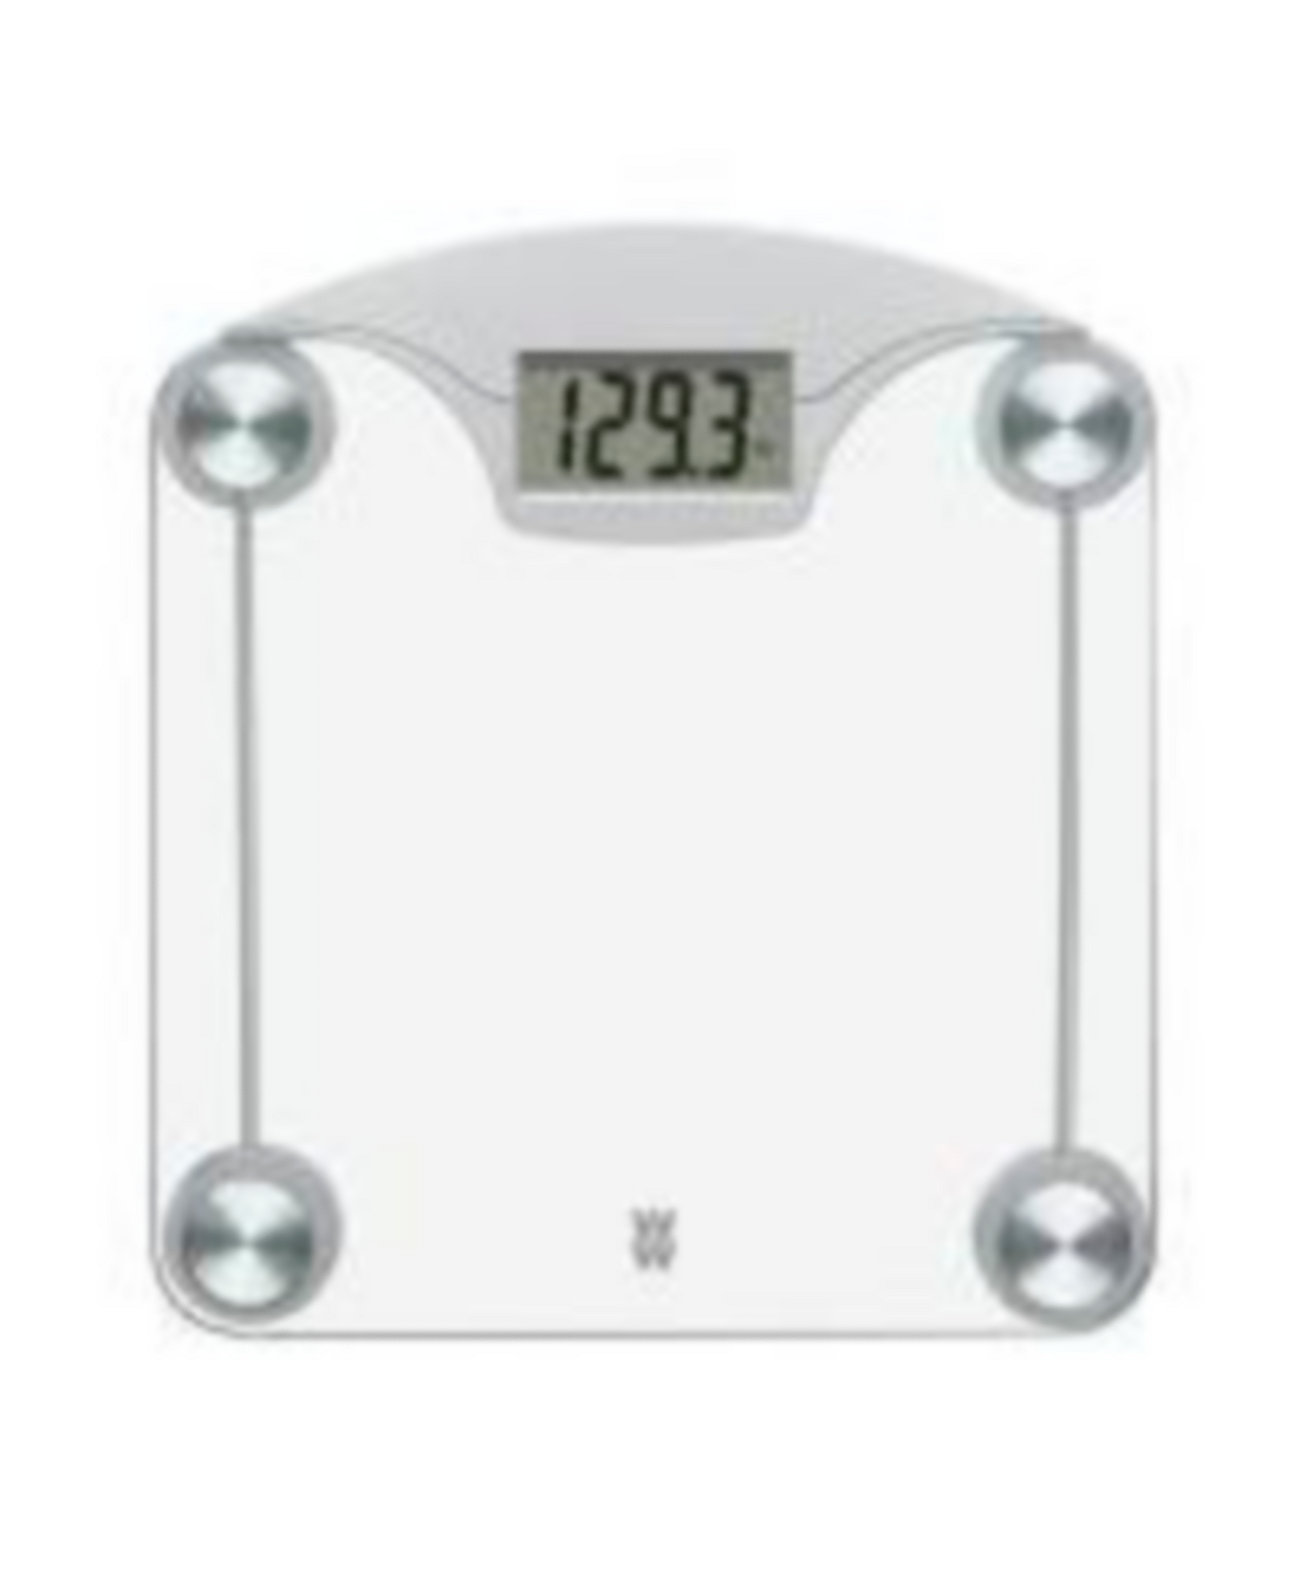 Цифровые стеклянные весы Conair Weight Watchers